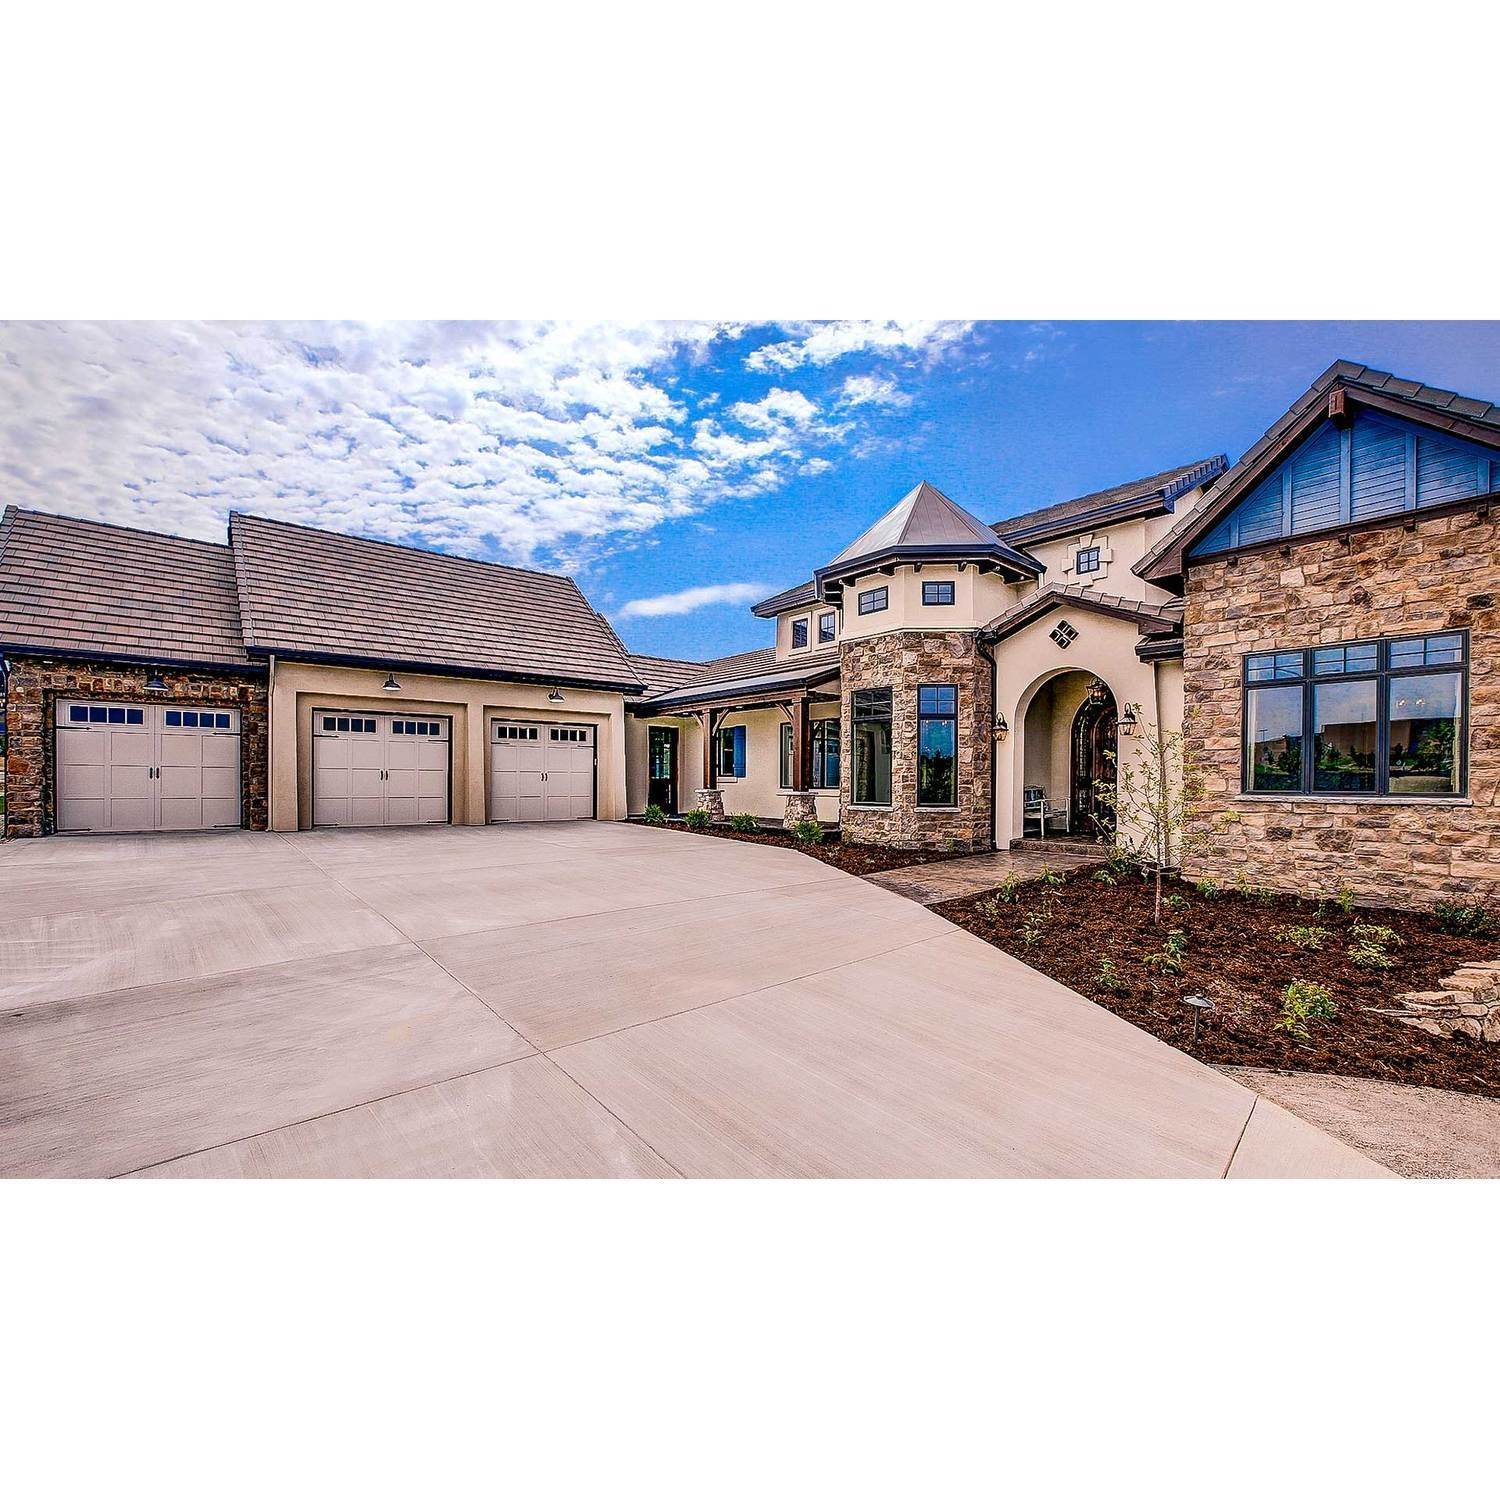 16. Galiant Homes xây dựng tại 4783 Farmingdale Dr, Colorado Springs, CO 80918